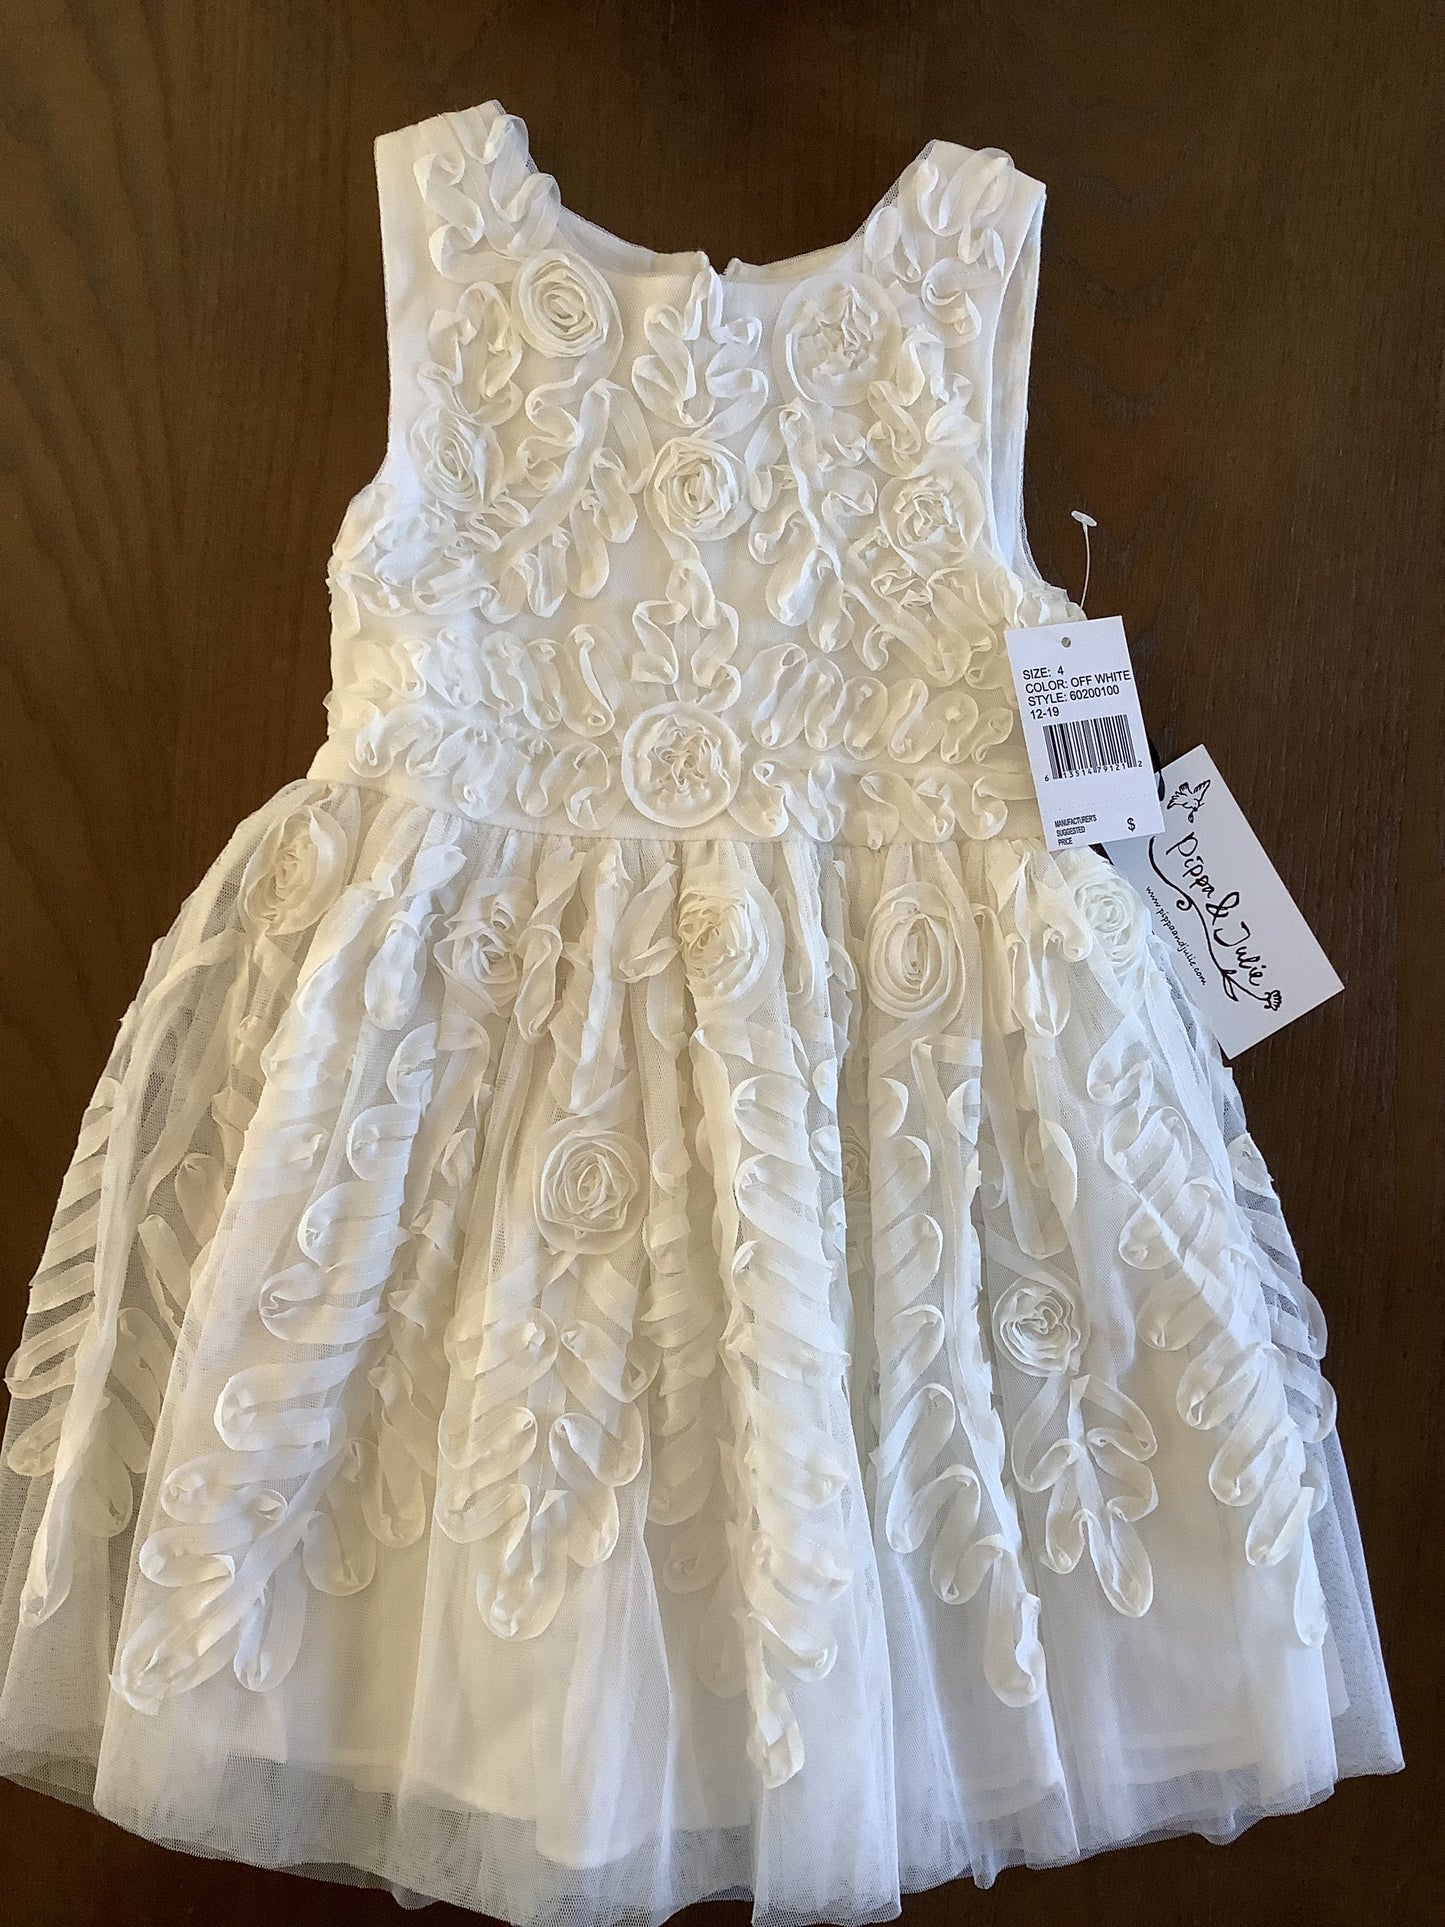 White floral Flower Girl Dress Size 4T